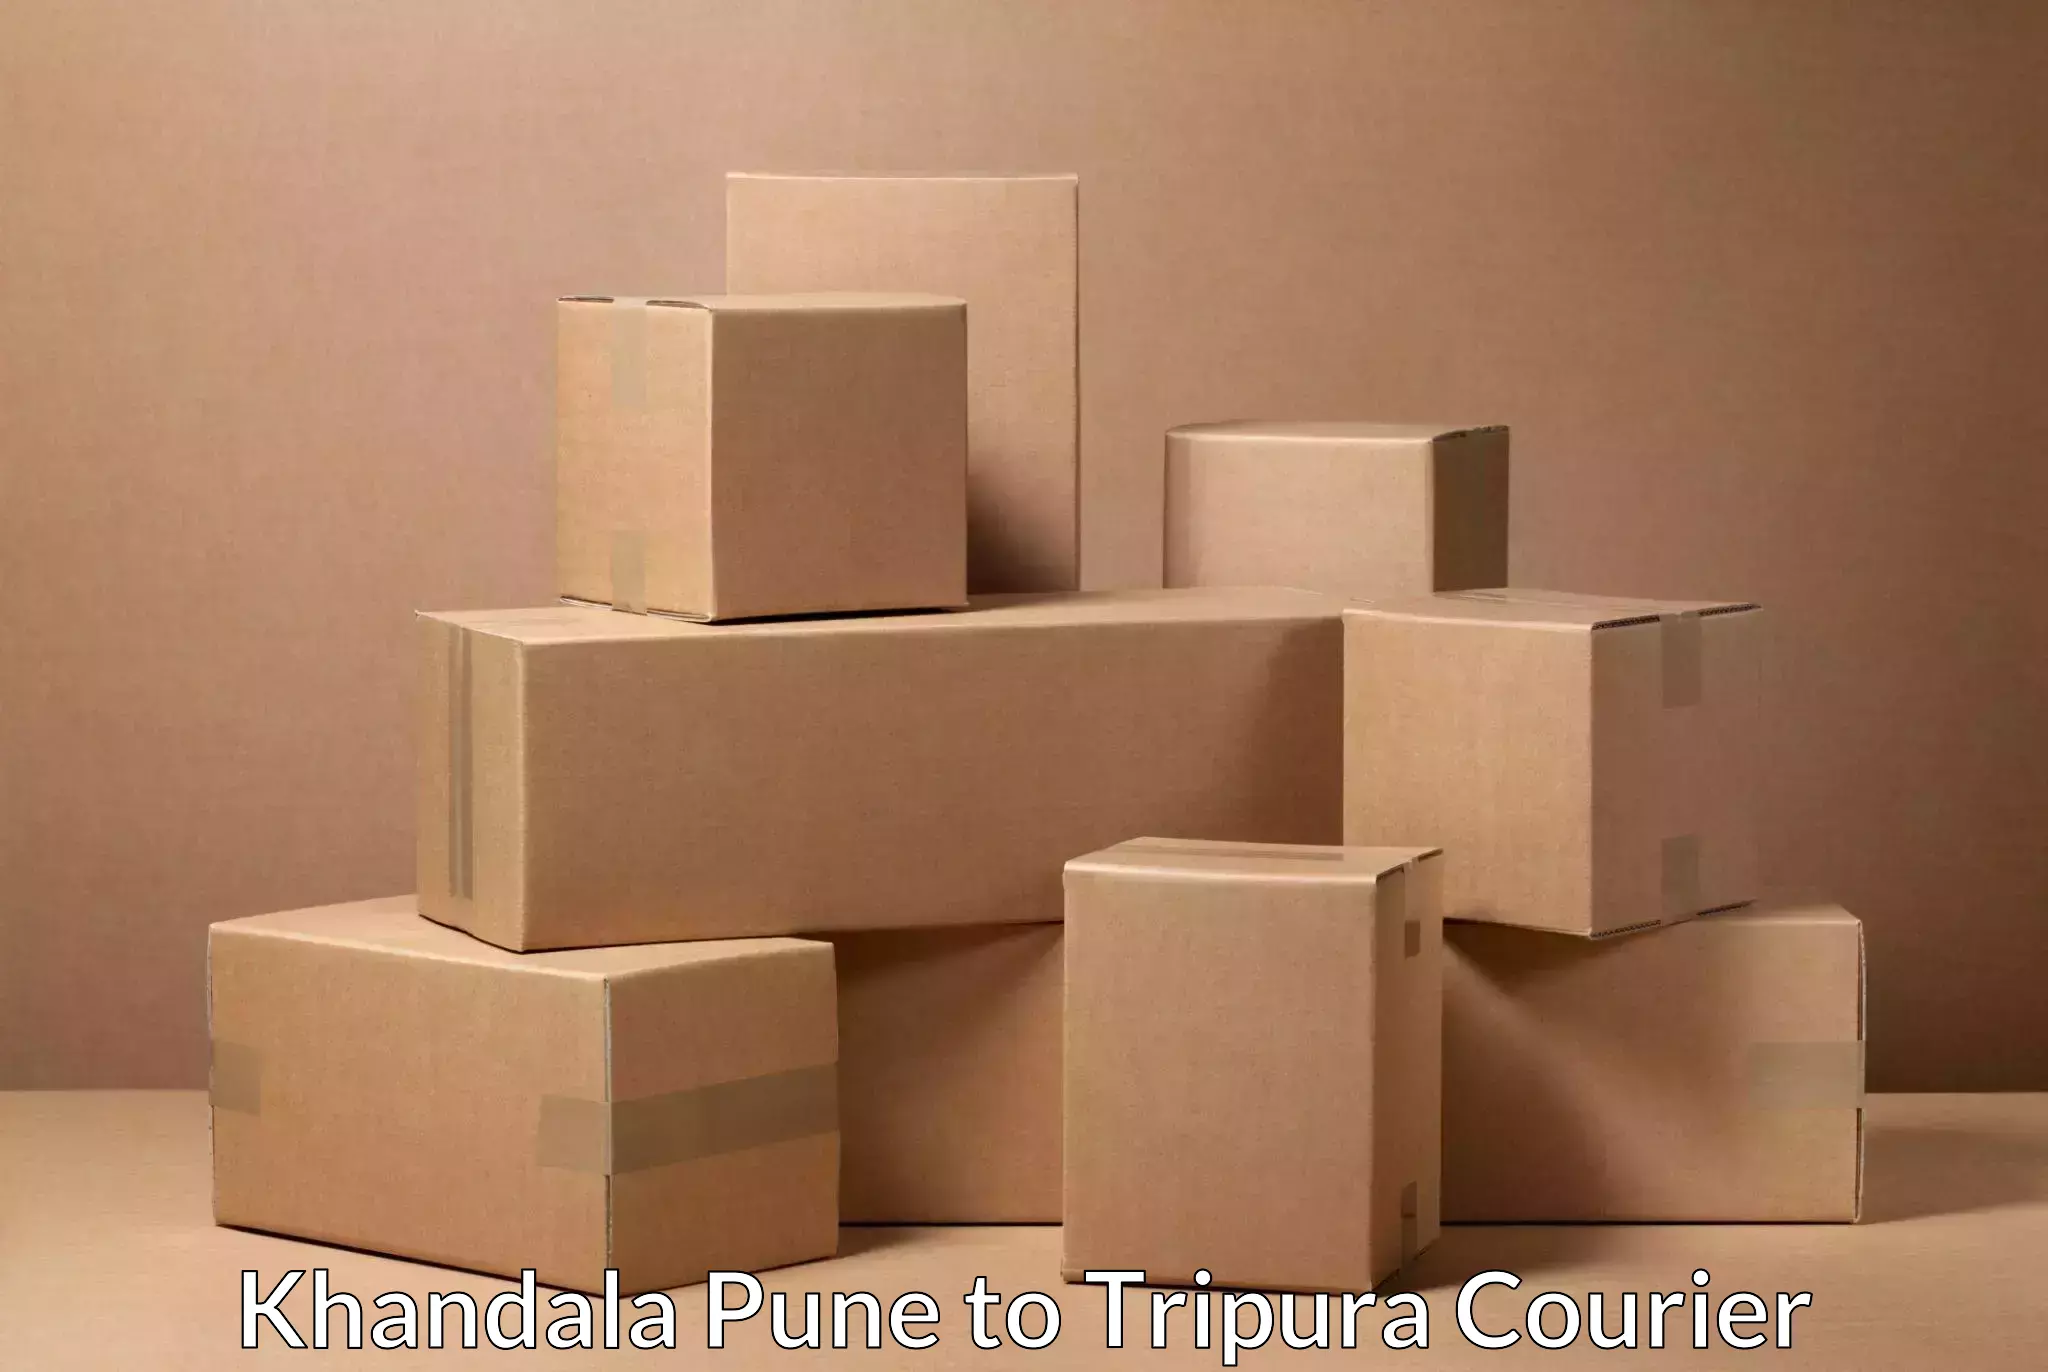 Customer-focused courier Khandala Pune to Udaipur Tripura